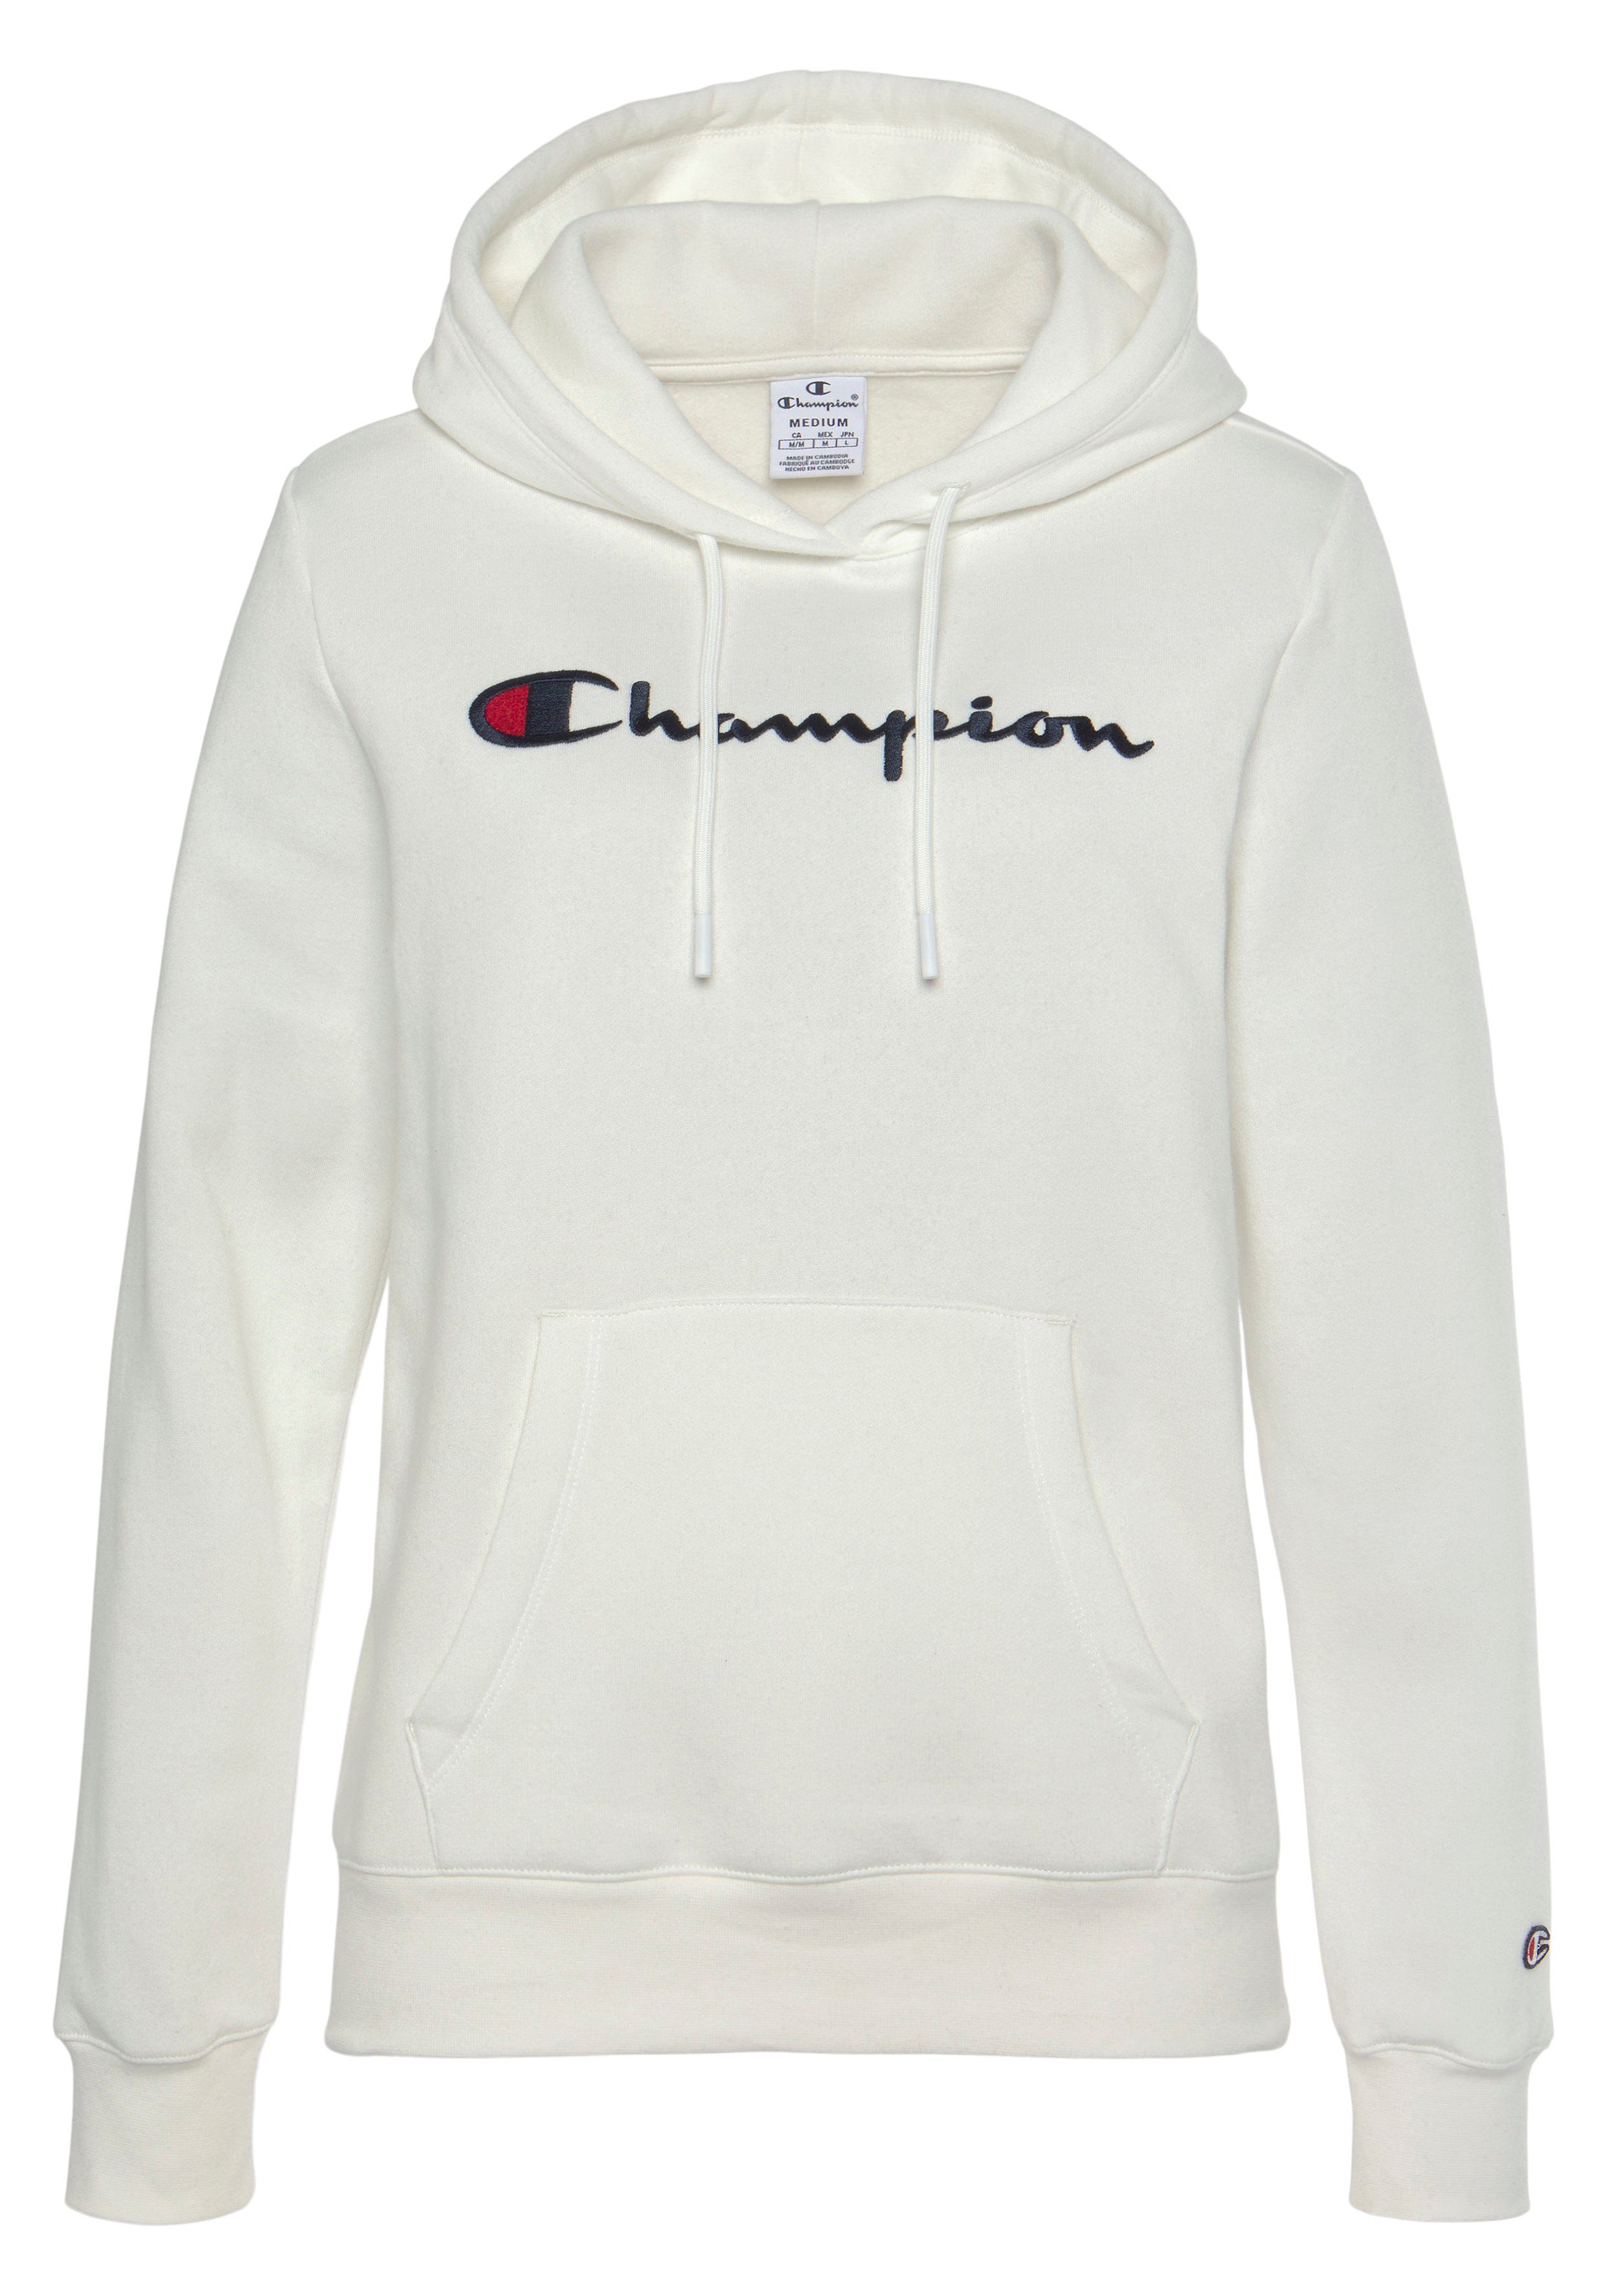 Champion Kapuzenpullover Fleece Sweatshirt large Hooded aus Classic Log, Sweatshirt leichtem